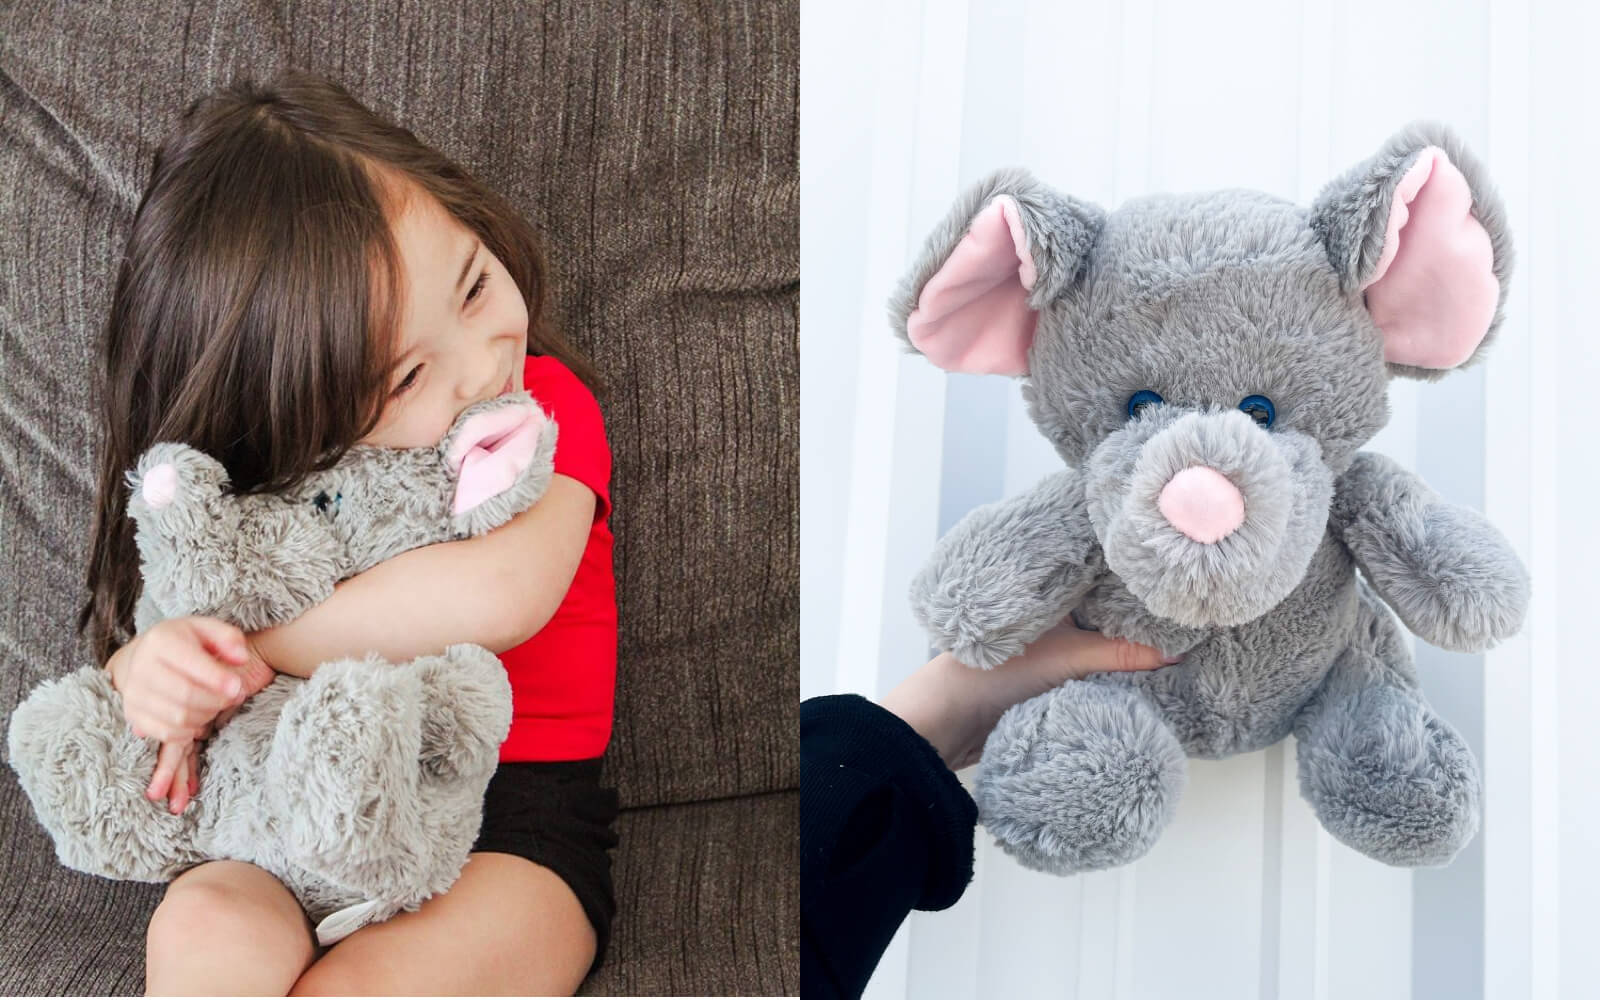 little girl holding stuffed animal elephant